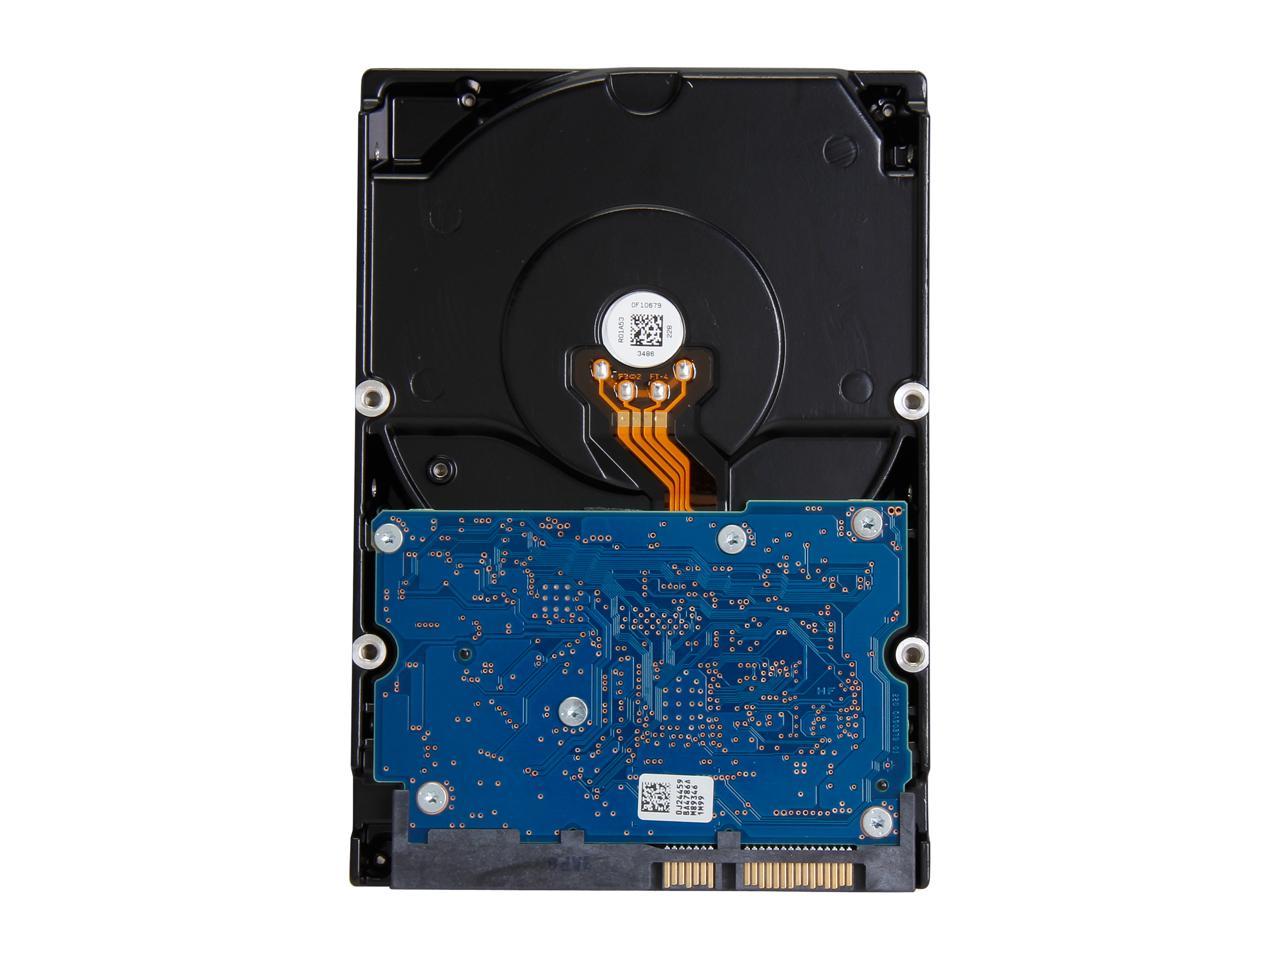 HGST Deskstar NAS 3.5" 4TB 7200 RPM 64MB Cache SATA 6.0Gb/s High-Performance Hard Drive for Desktop NAS Systems Retail Packaging